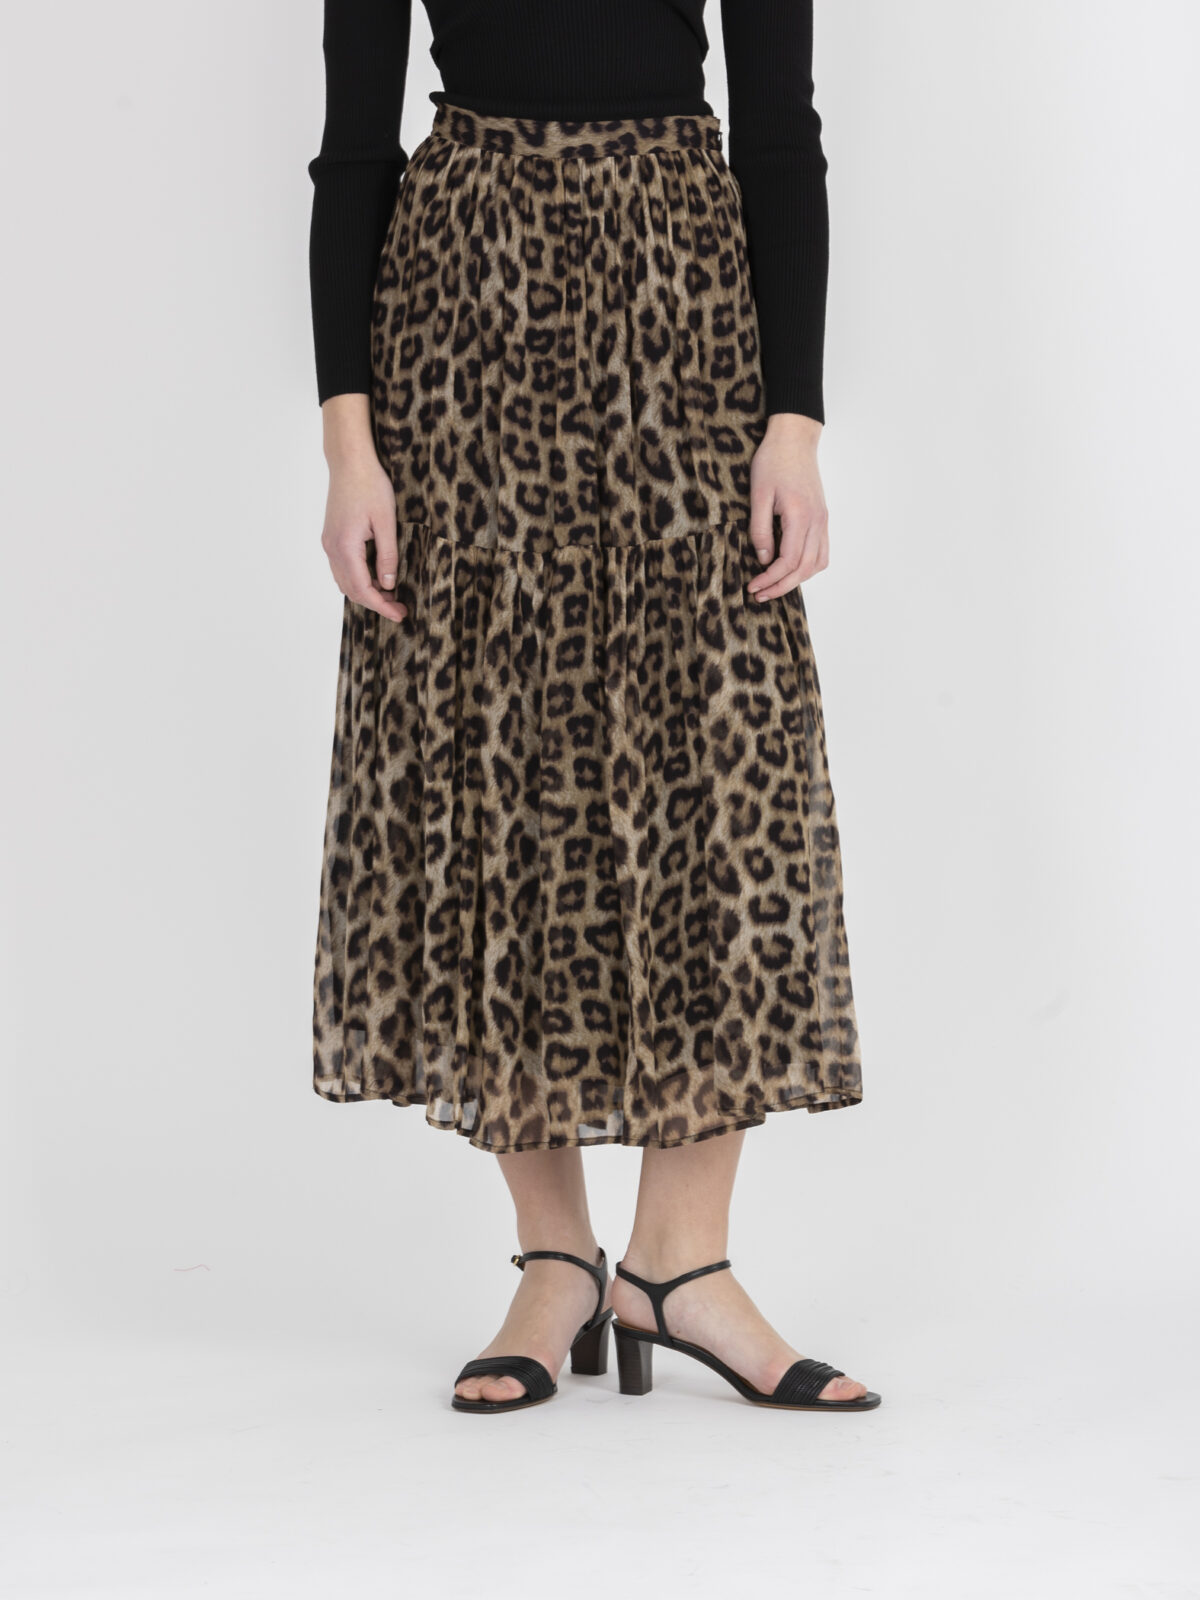 fley-leopard-midi-skirt-georgette-flowing-ruffle-bash-matchboxatehns